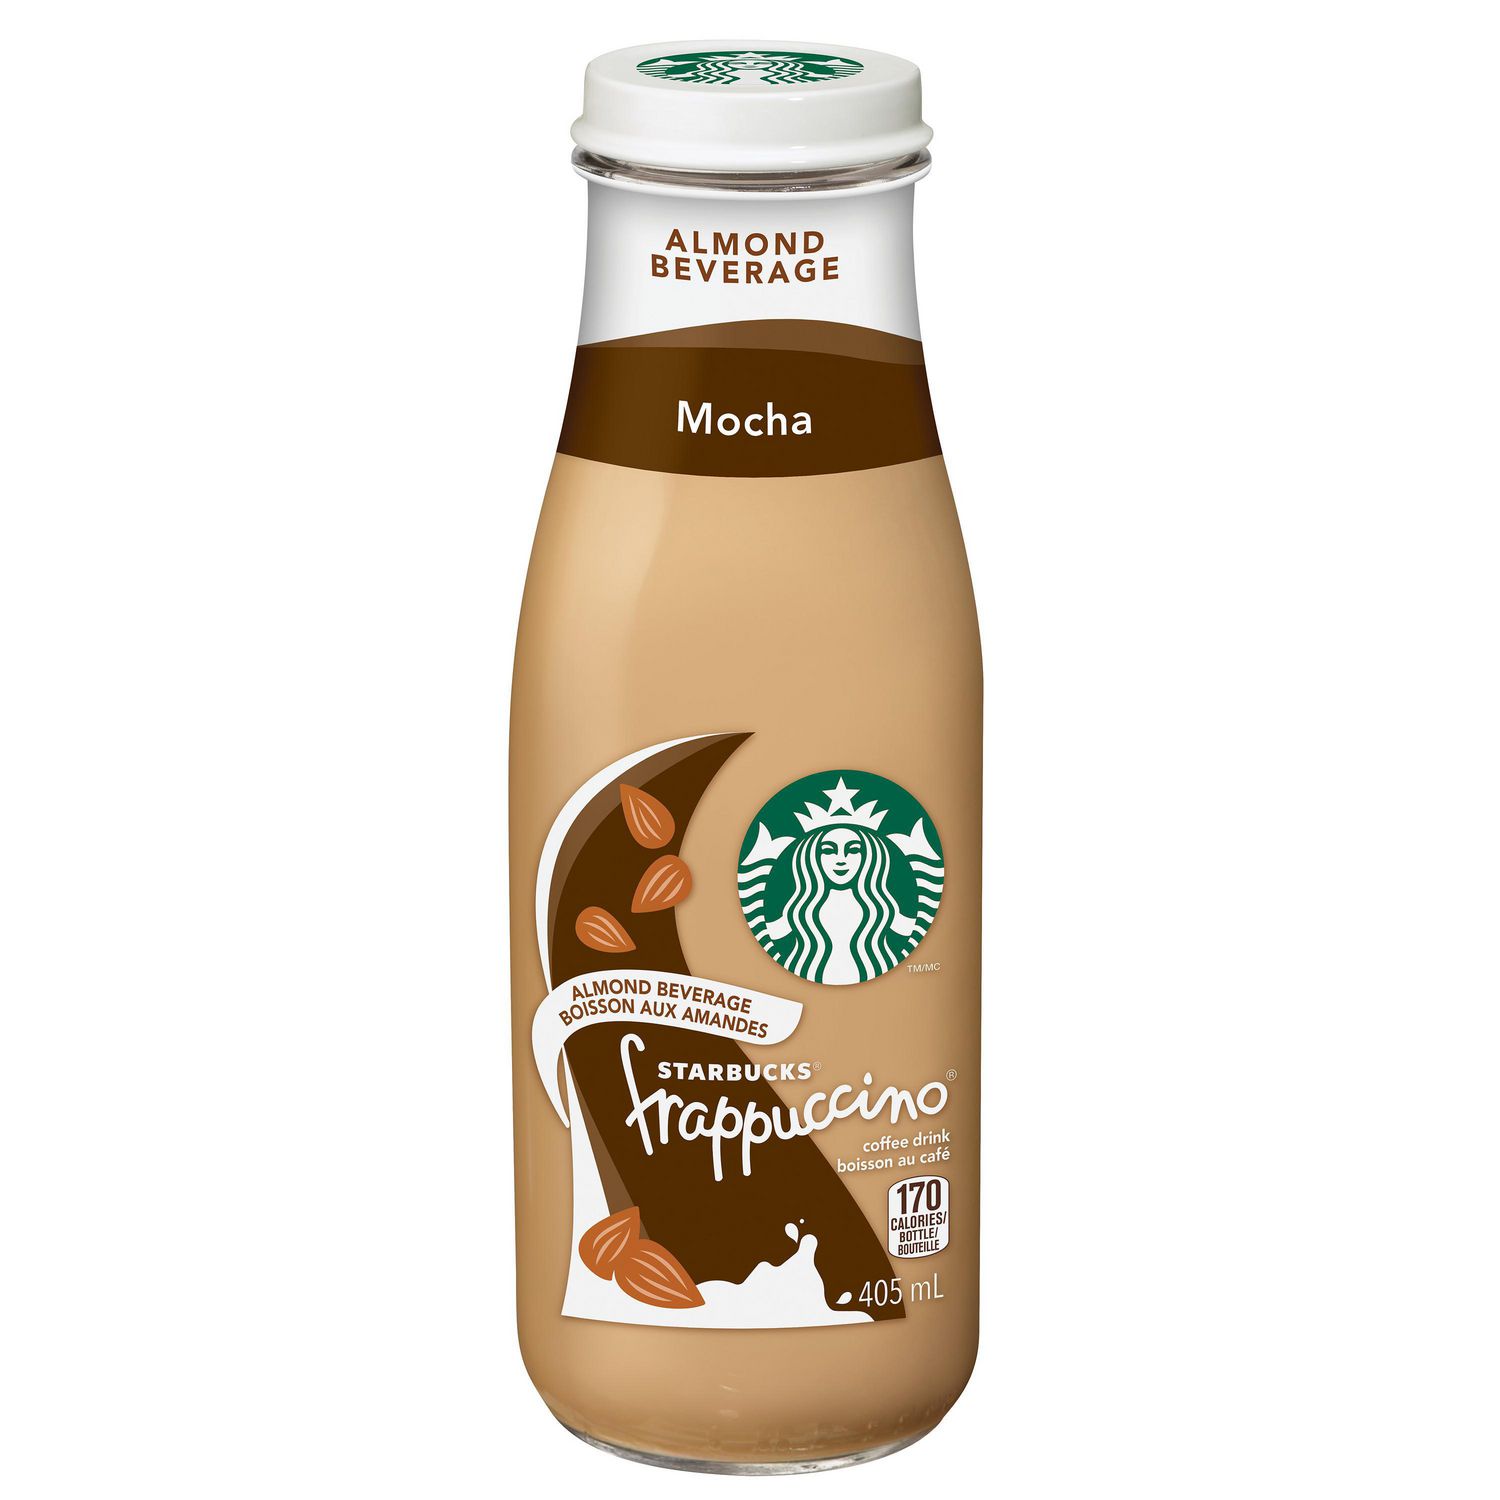 Starbucks Frappuccino Mocha Almond Beverage Coffee Drink